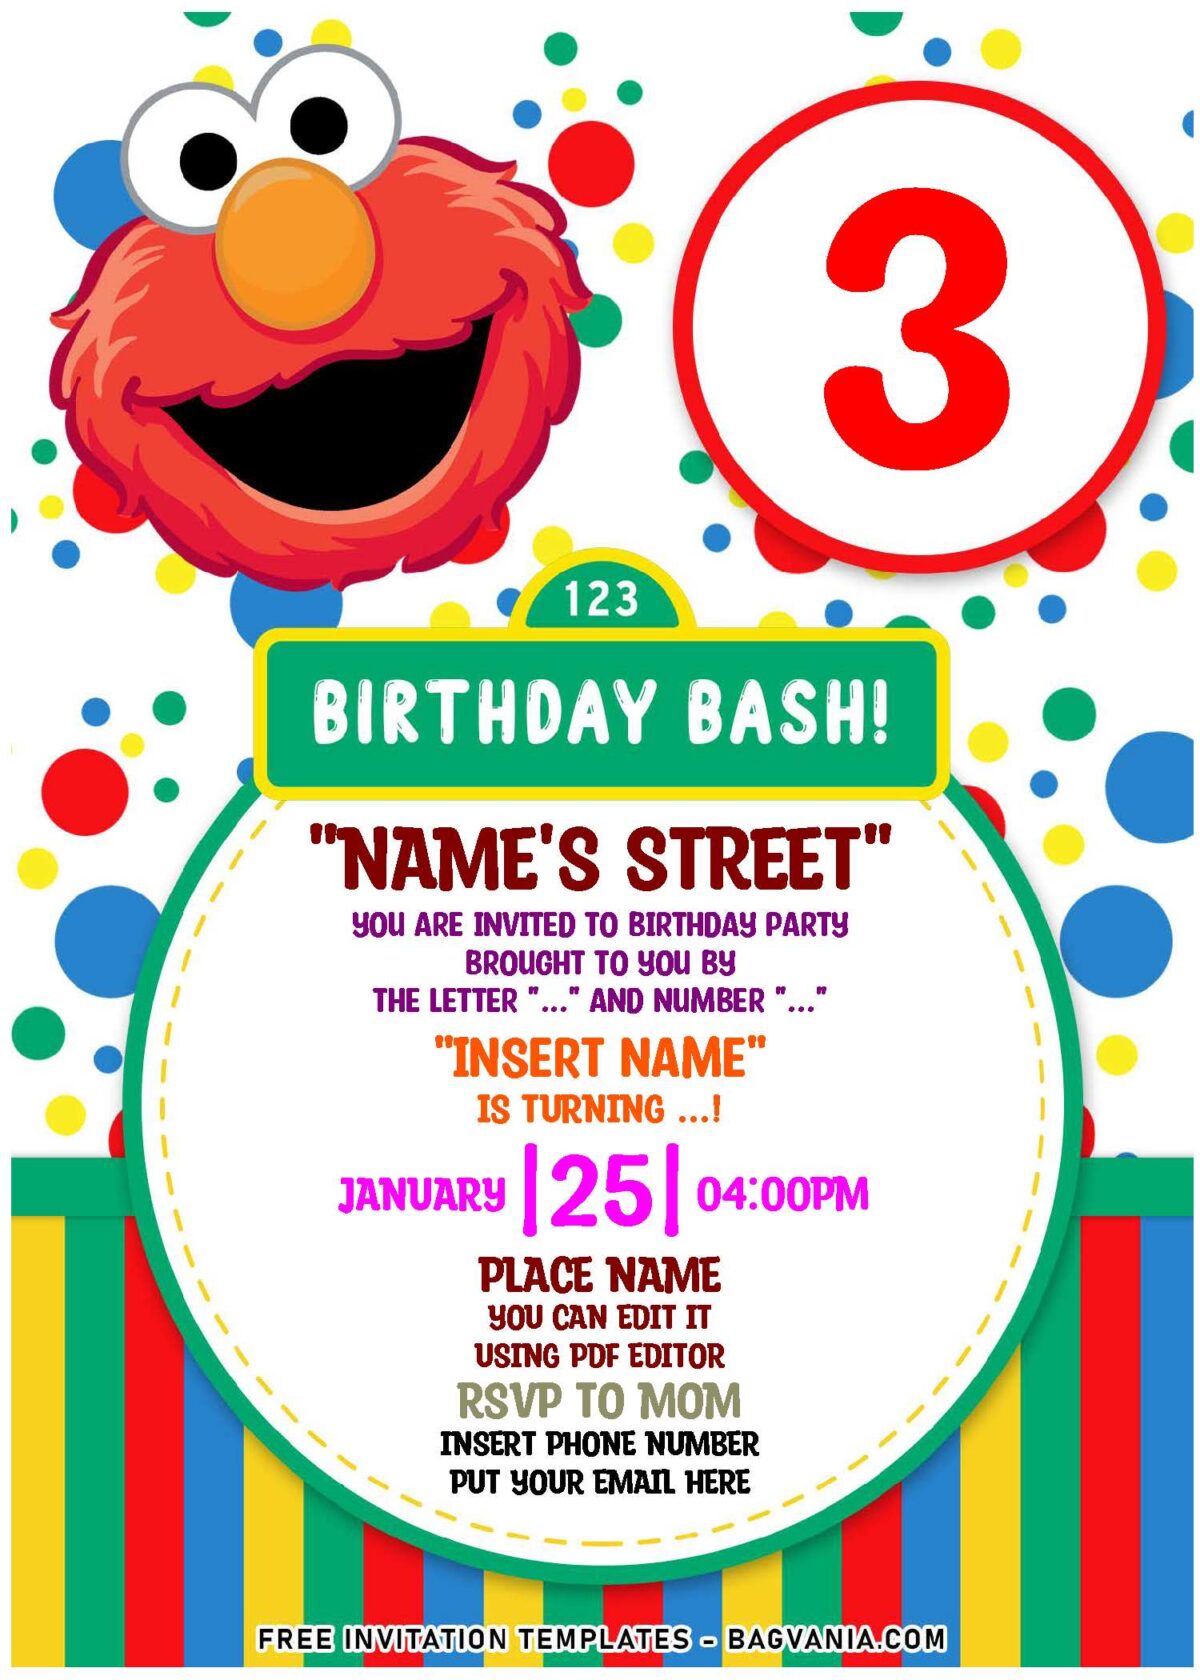 (Free Editable PDF) Super Cute Sesame Street Birthday Invitation Templates with colorful polka dots